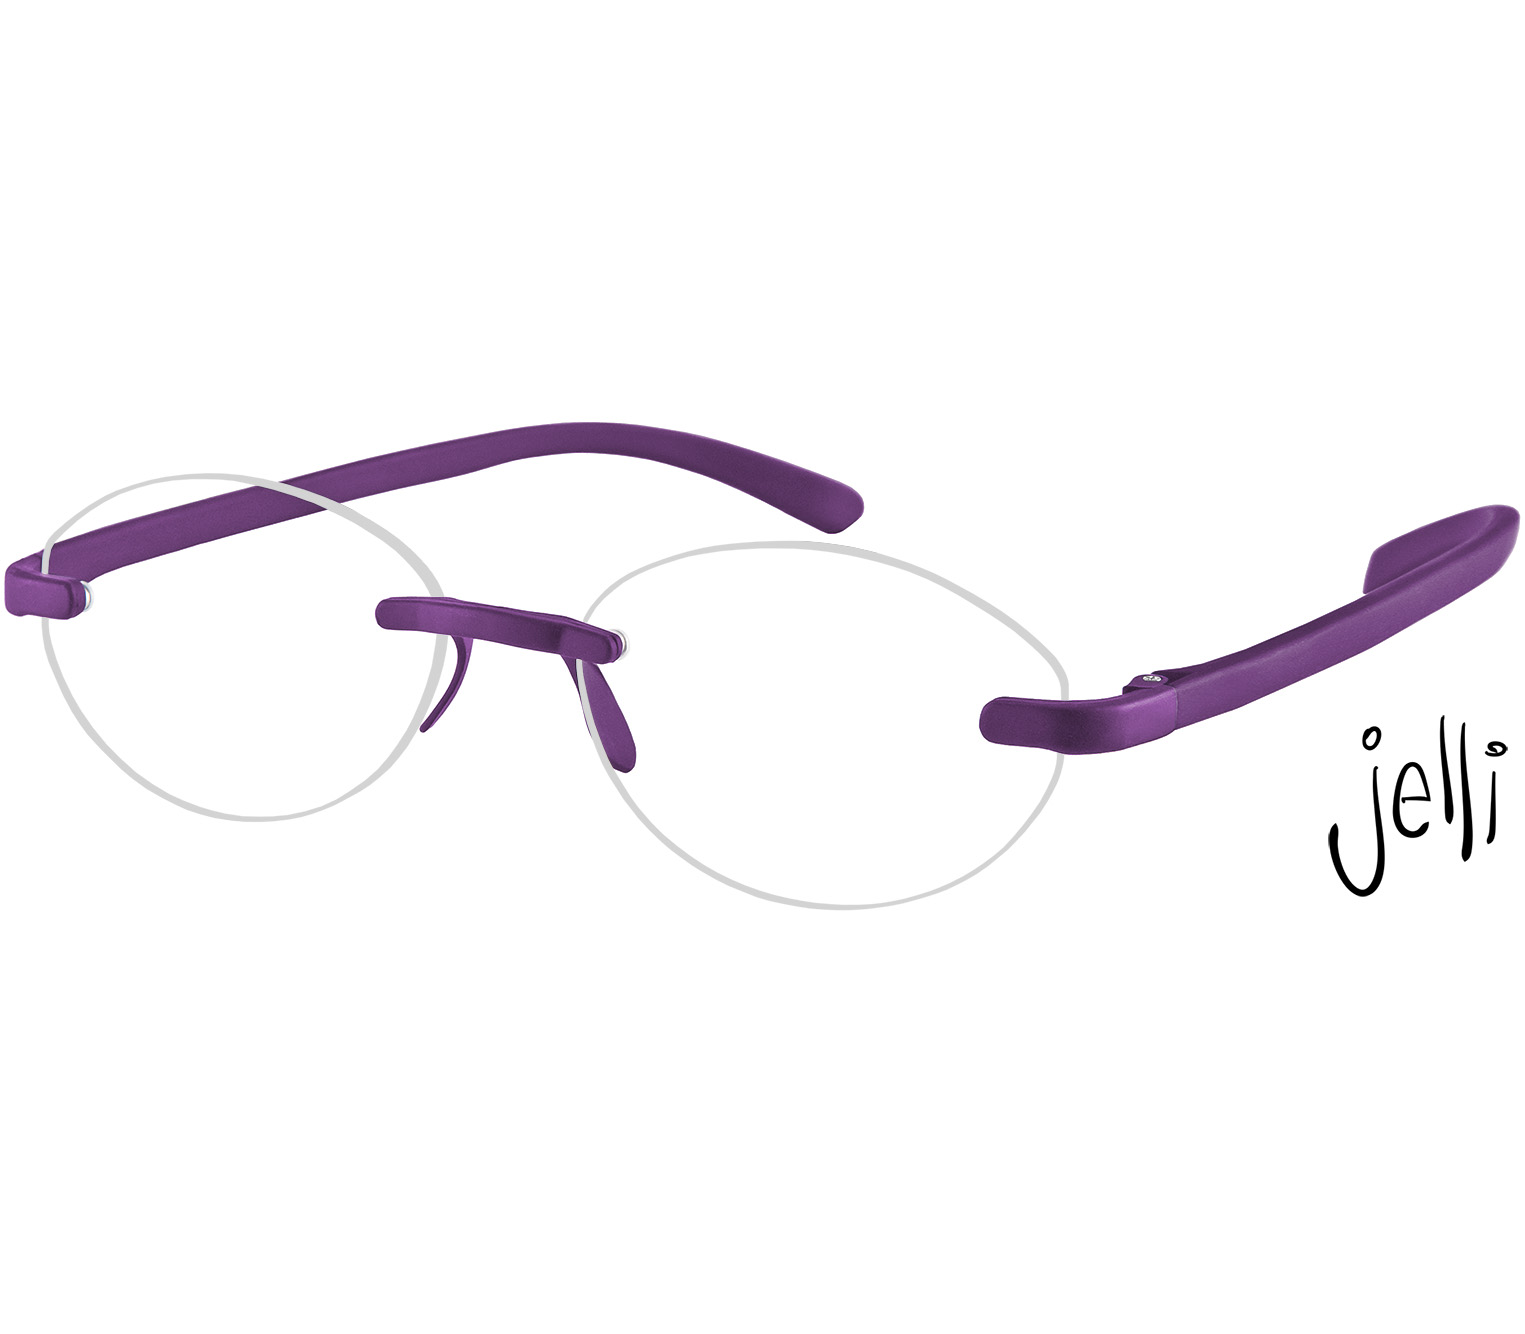 Main Image (Angle) - Jelli Solo (Purple) Rimless Reading Glasses